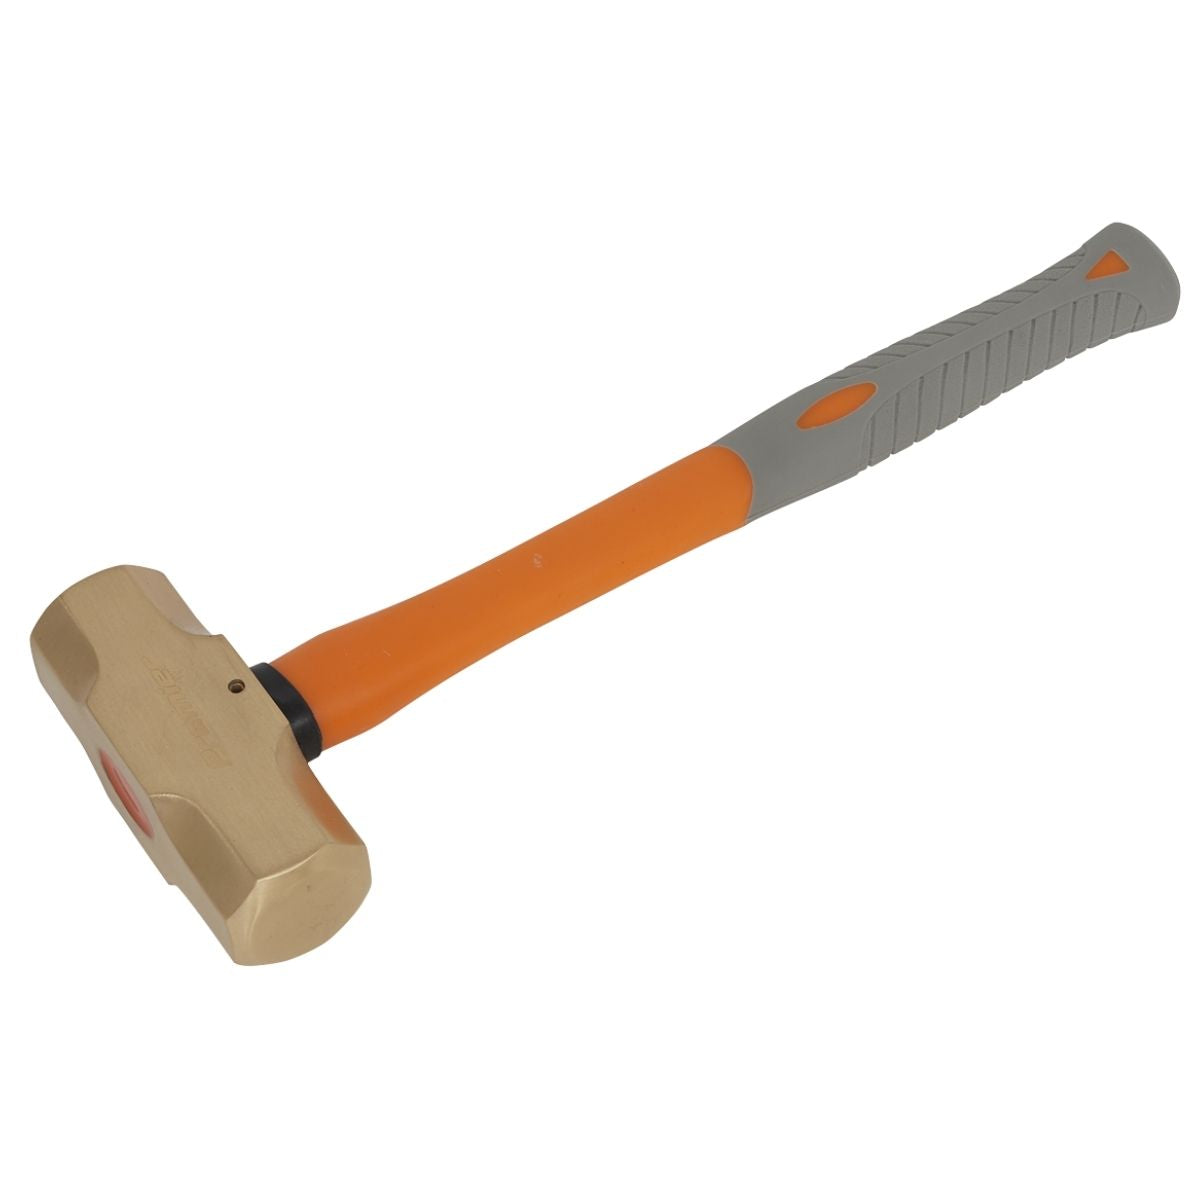 Sealey NS089 Sledge Hammer 4.4lb Non-Sparking